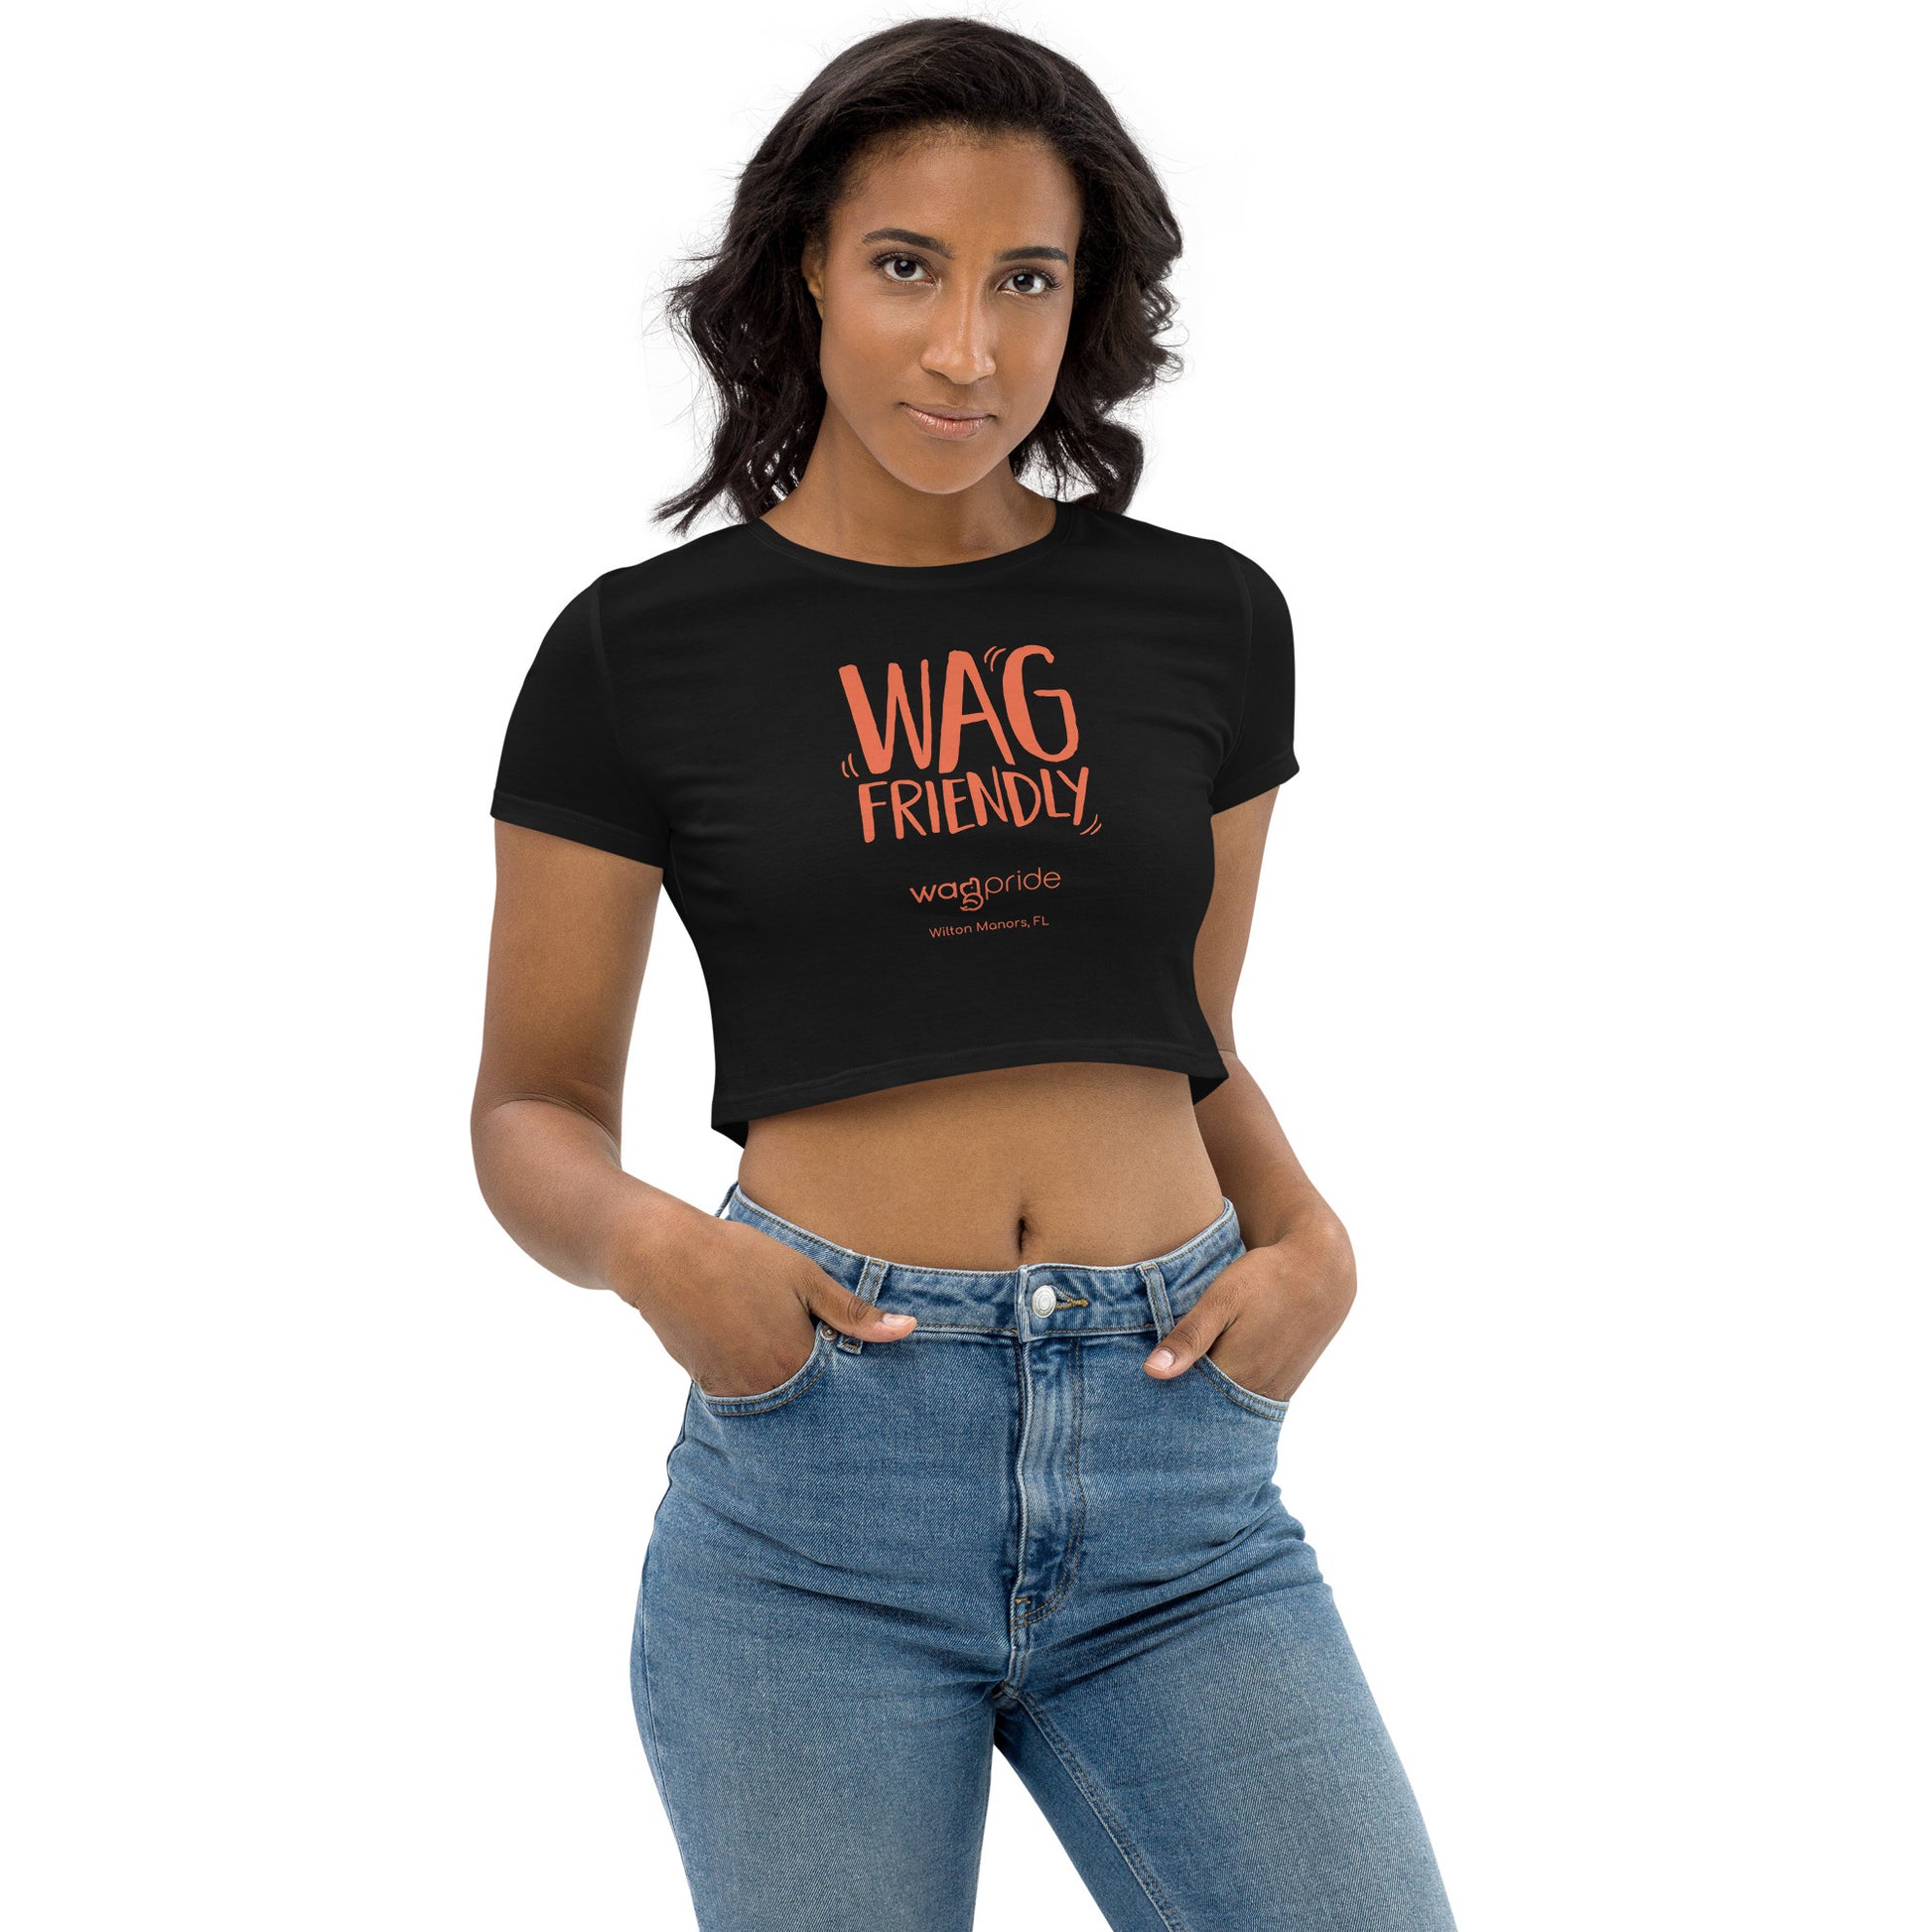 Wagpride Wag Friendly Women's Organic Crop Top Size S